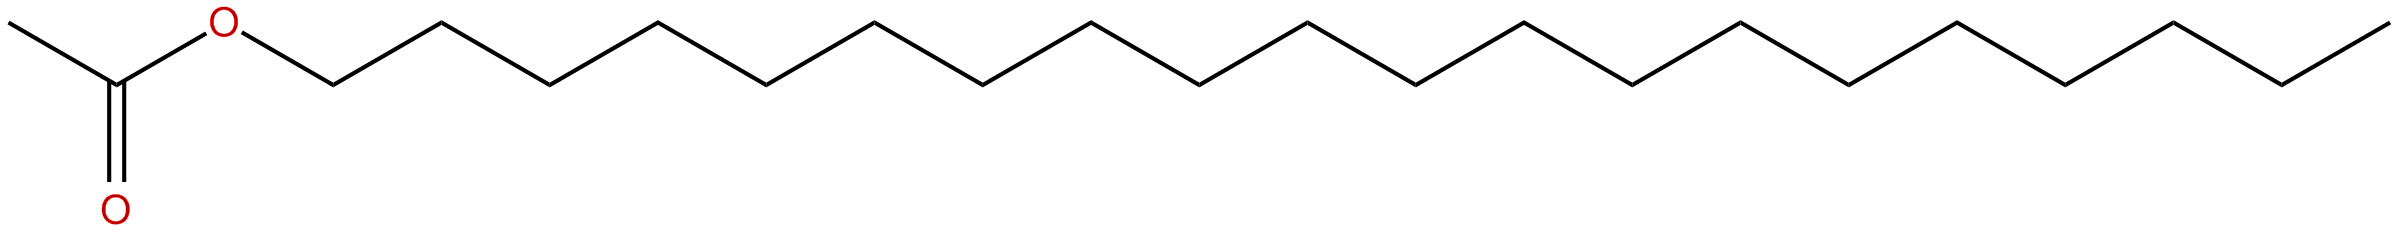 Image of eicosyl ethanoate